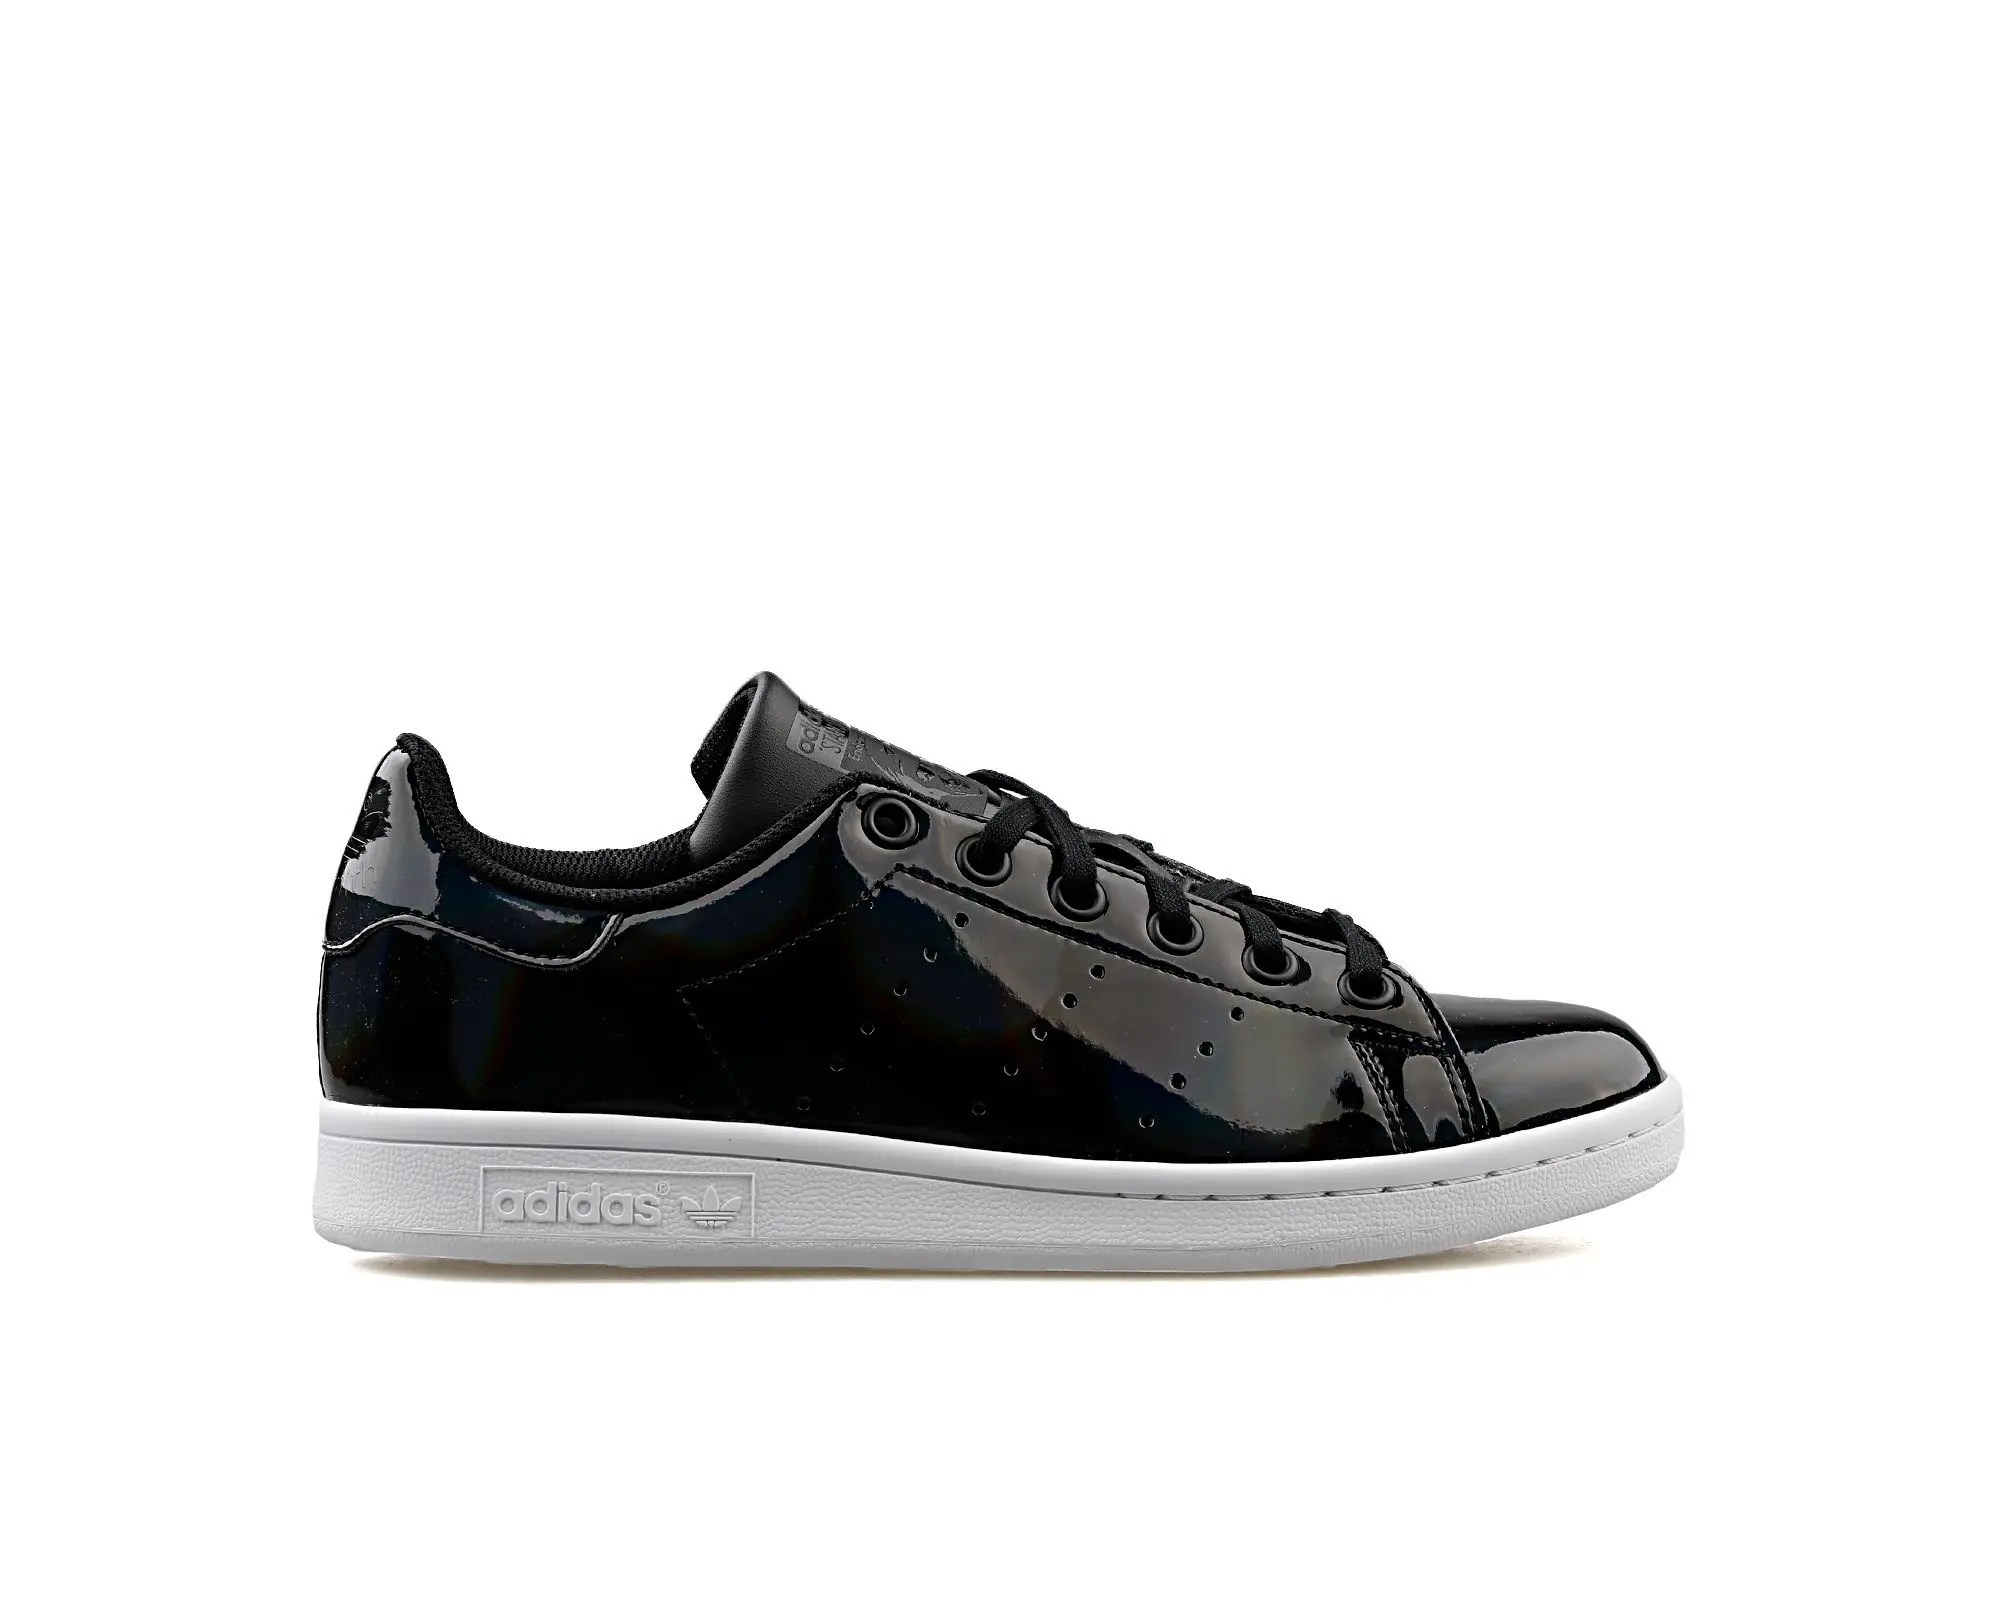 Adidas Original Stan Smith J Black Kids Shoes Unisex Girls & Boys Casual Sneakers